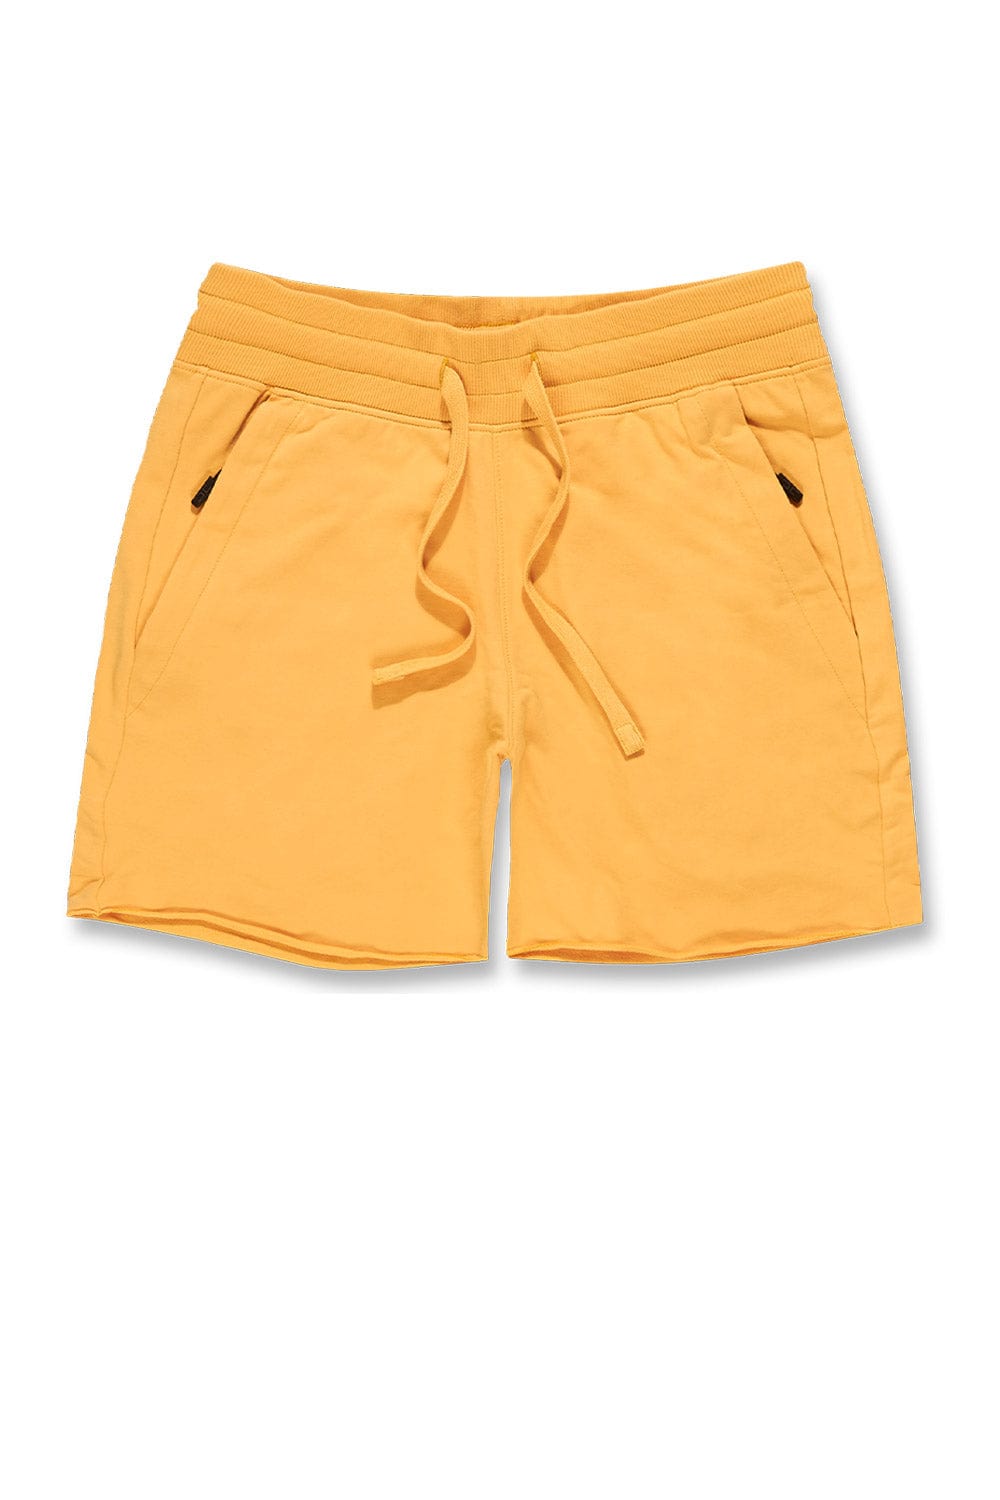 Jordan Craig Athletic - Summer Breeze Knit Shorts Matte Orange / S